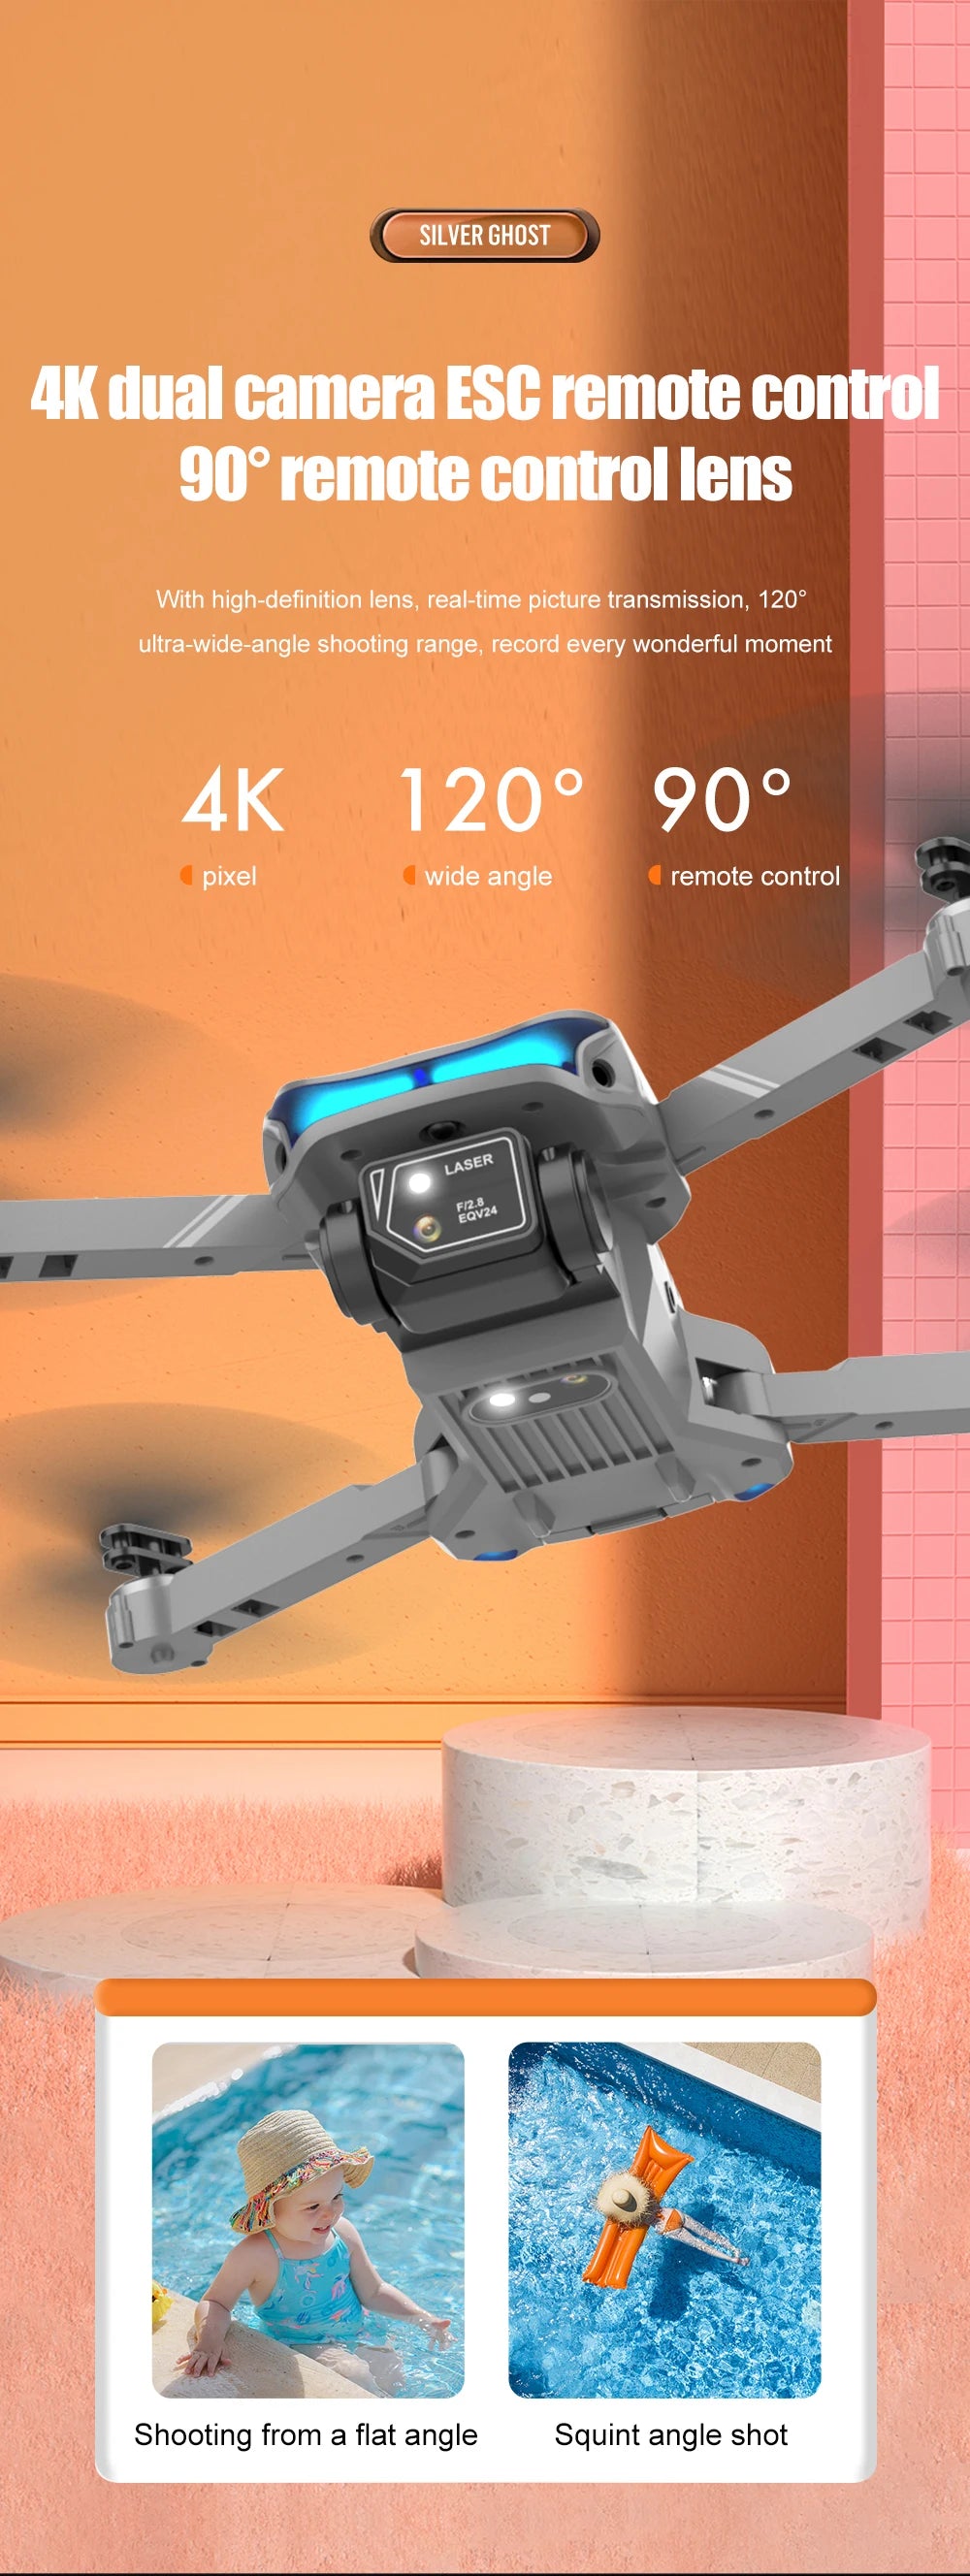 XT9 Mini Drone, silver ghost 4kdual camera esc remote control lens with high